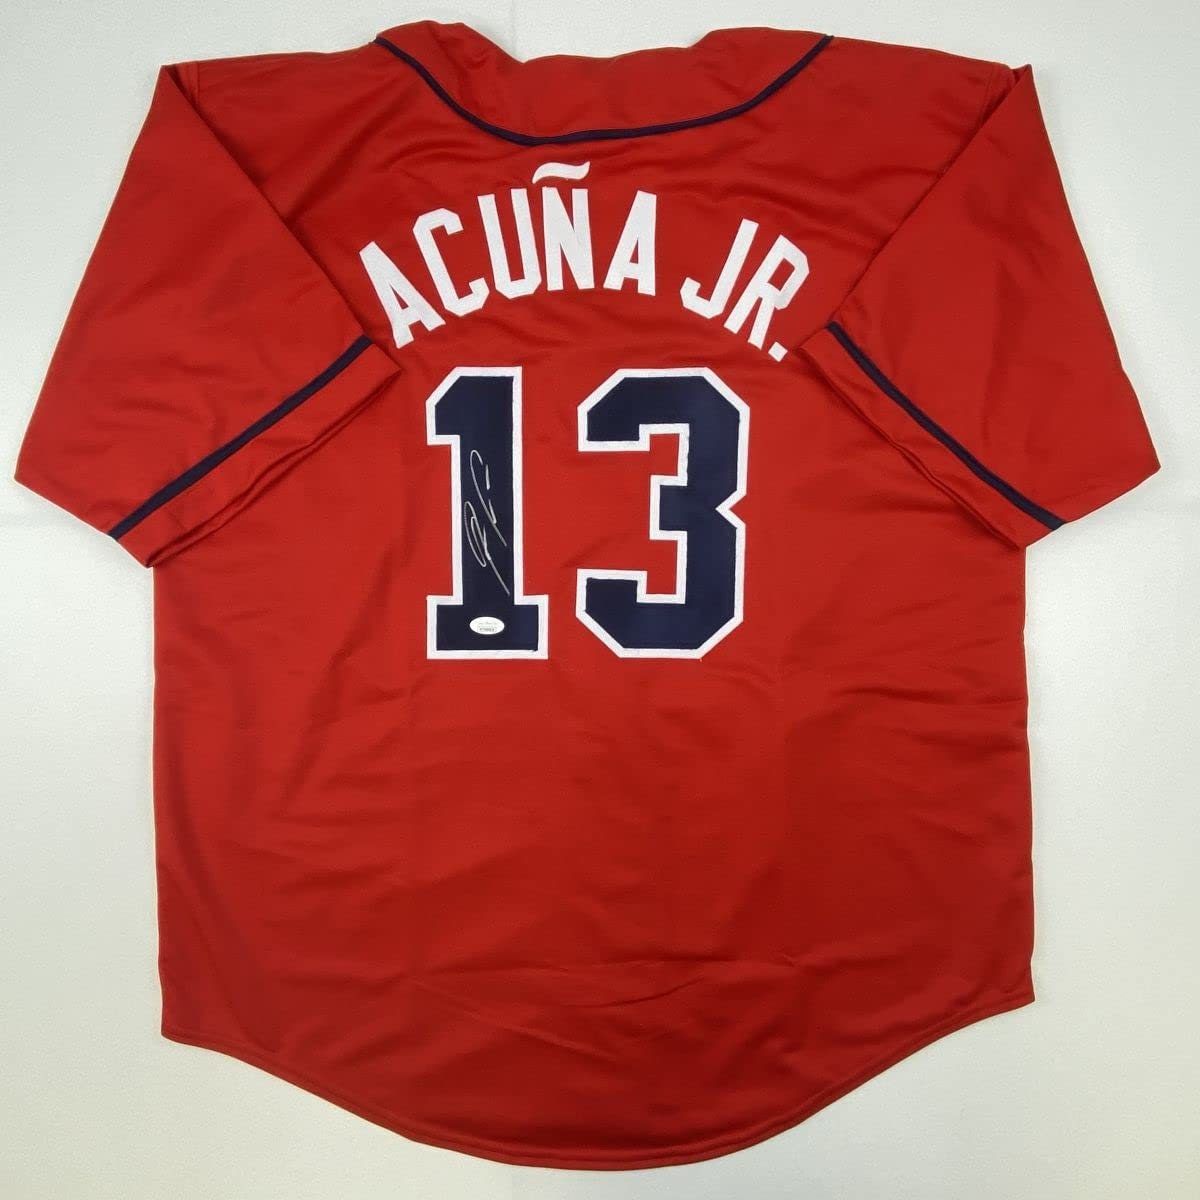 Ronald Acuna Jr. Signed World All-Star Game Jersey (JSA COA)